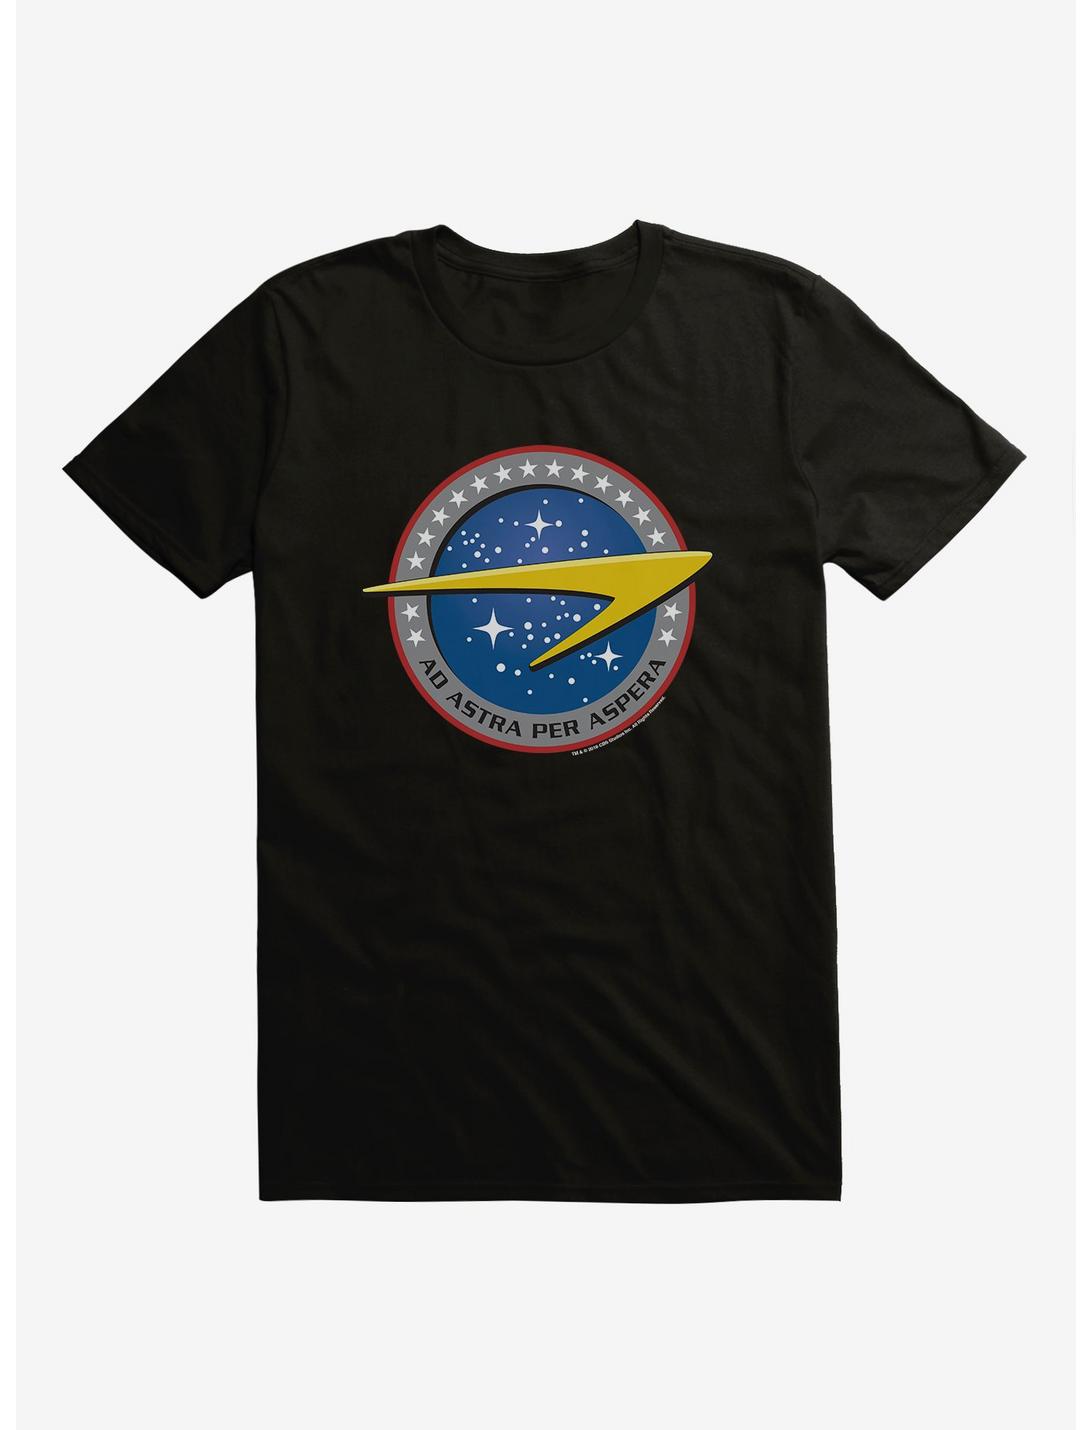 Star Trek Starfleet Command Ad Astra T-Shirt, , hi-res